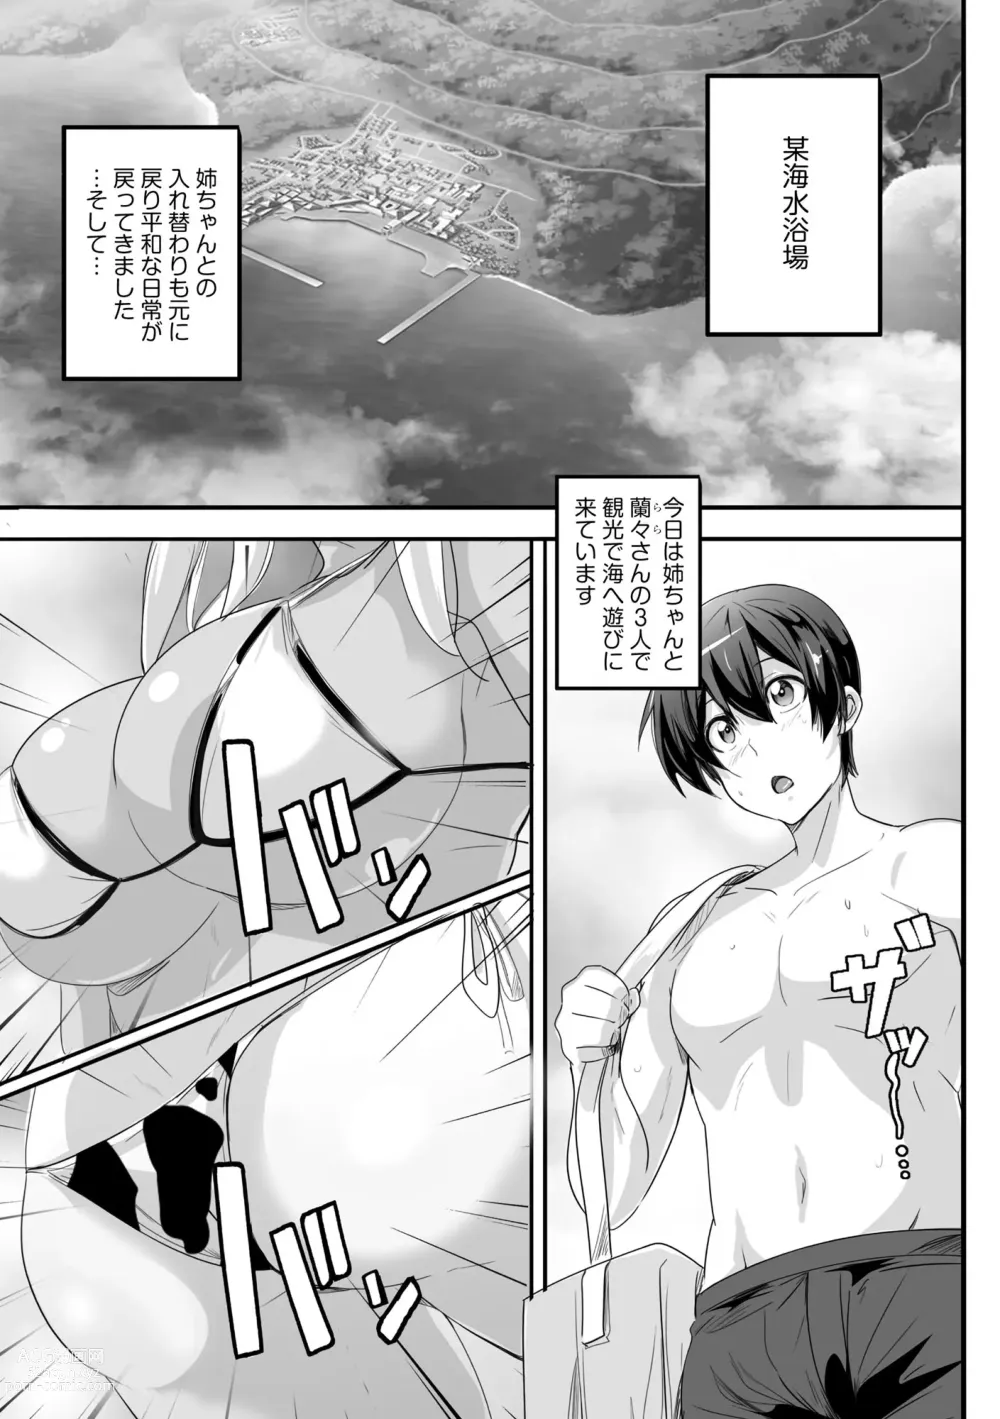 Page 7 of manga Cyberia Plus Vol. 13